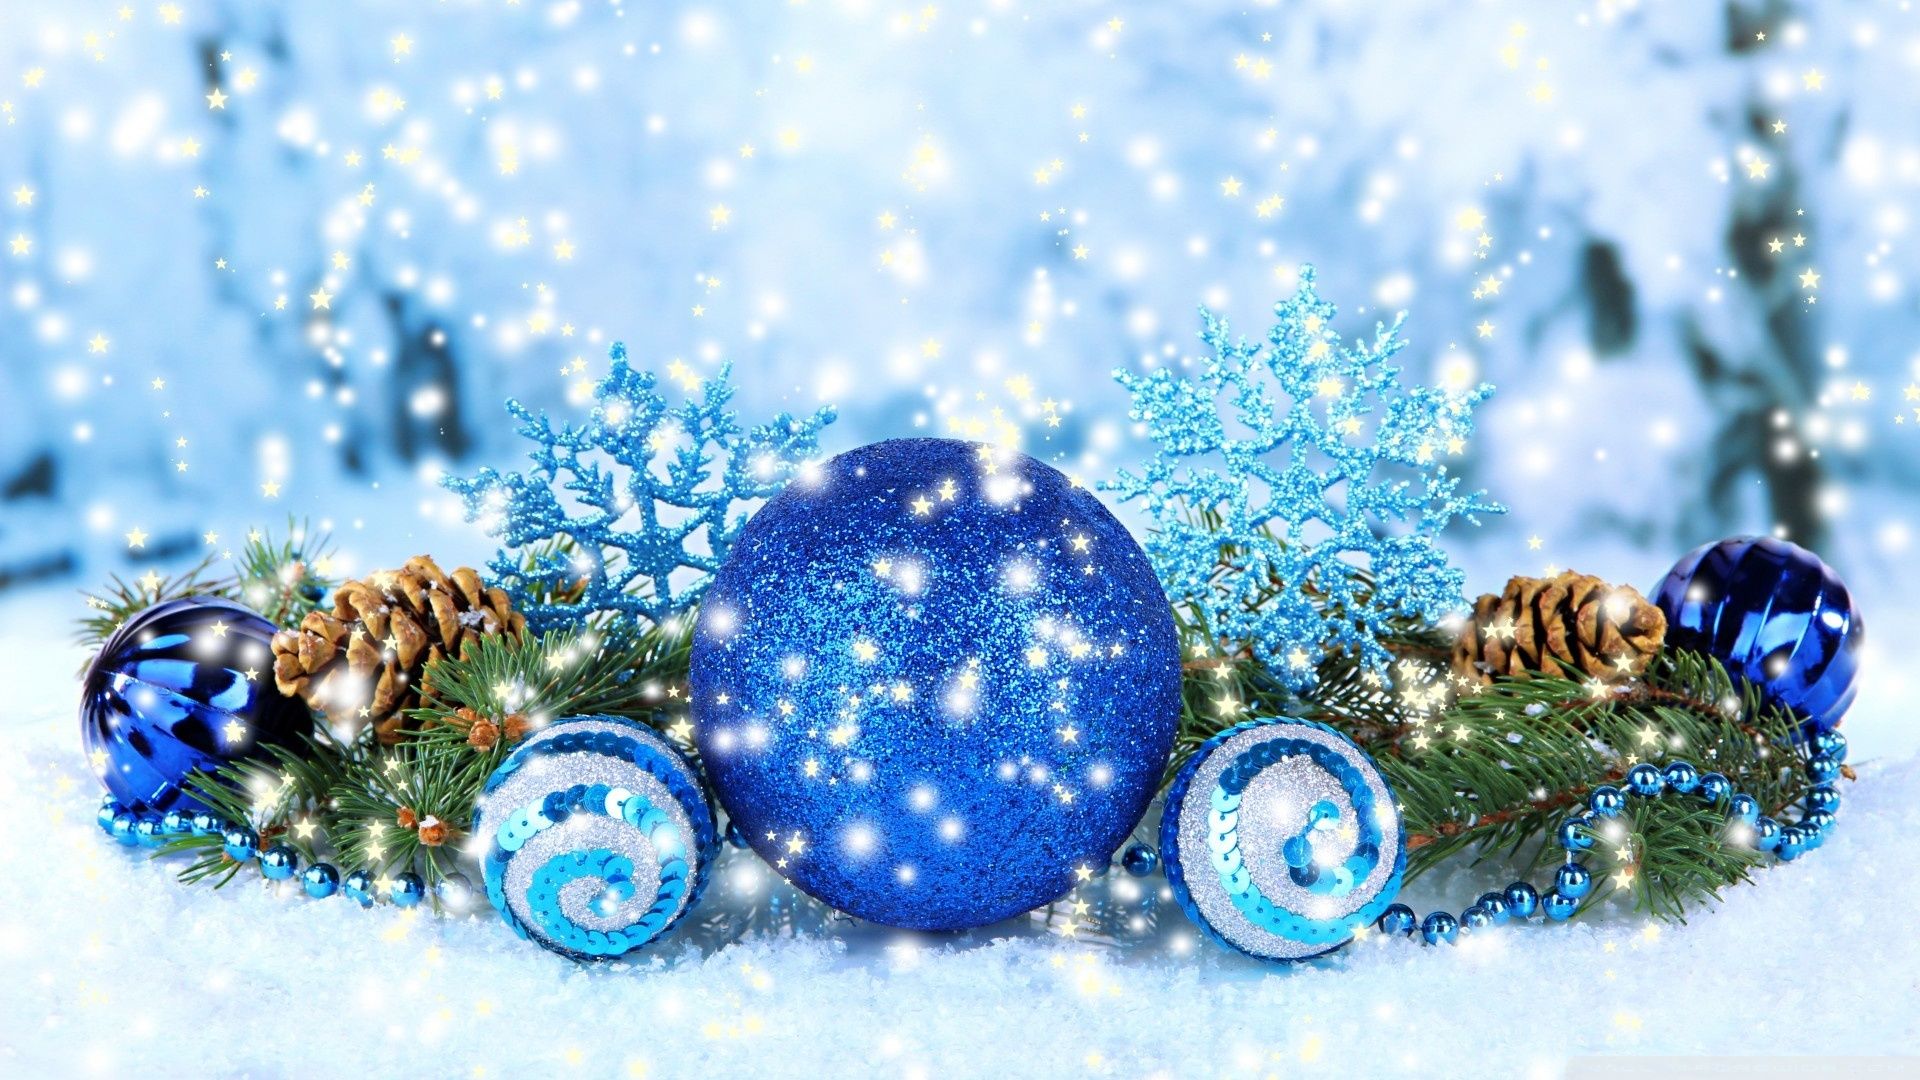 Blue Christmas Decorations 2016 Ultra HD Desktop Background Wallpaper for 4K UHD TV, Tablet